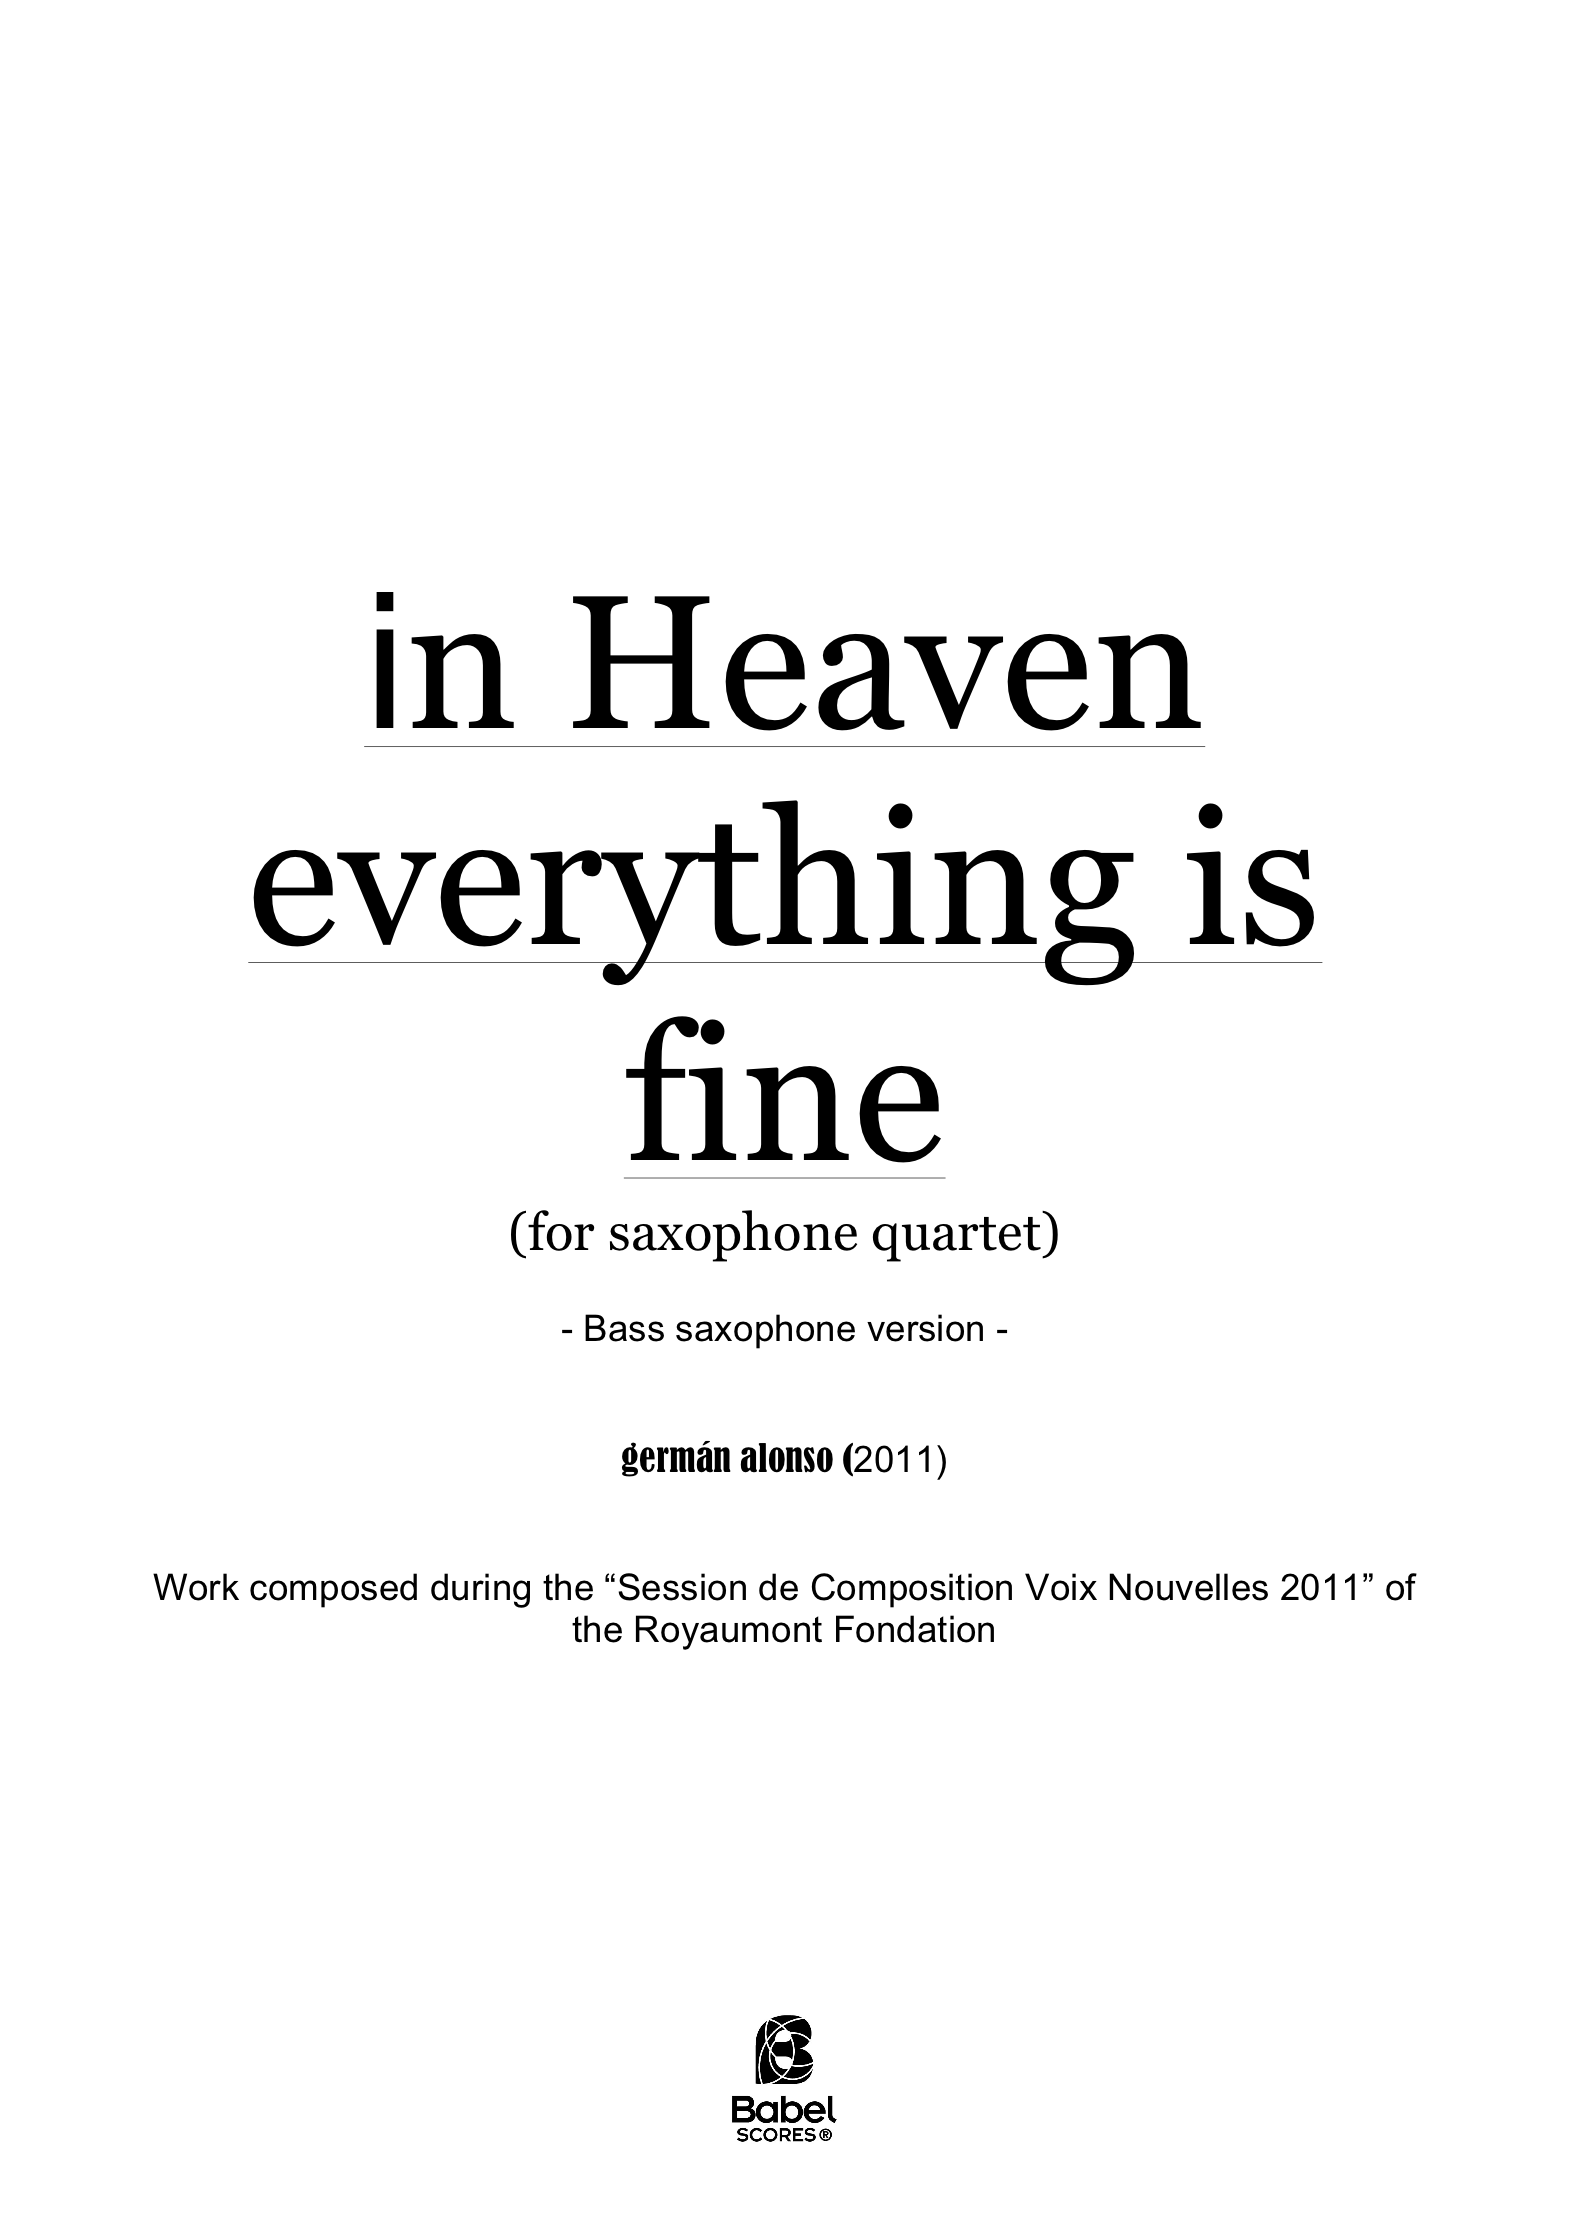 in heaven everything is fine A4 z